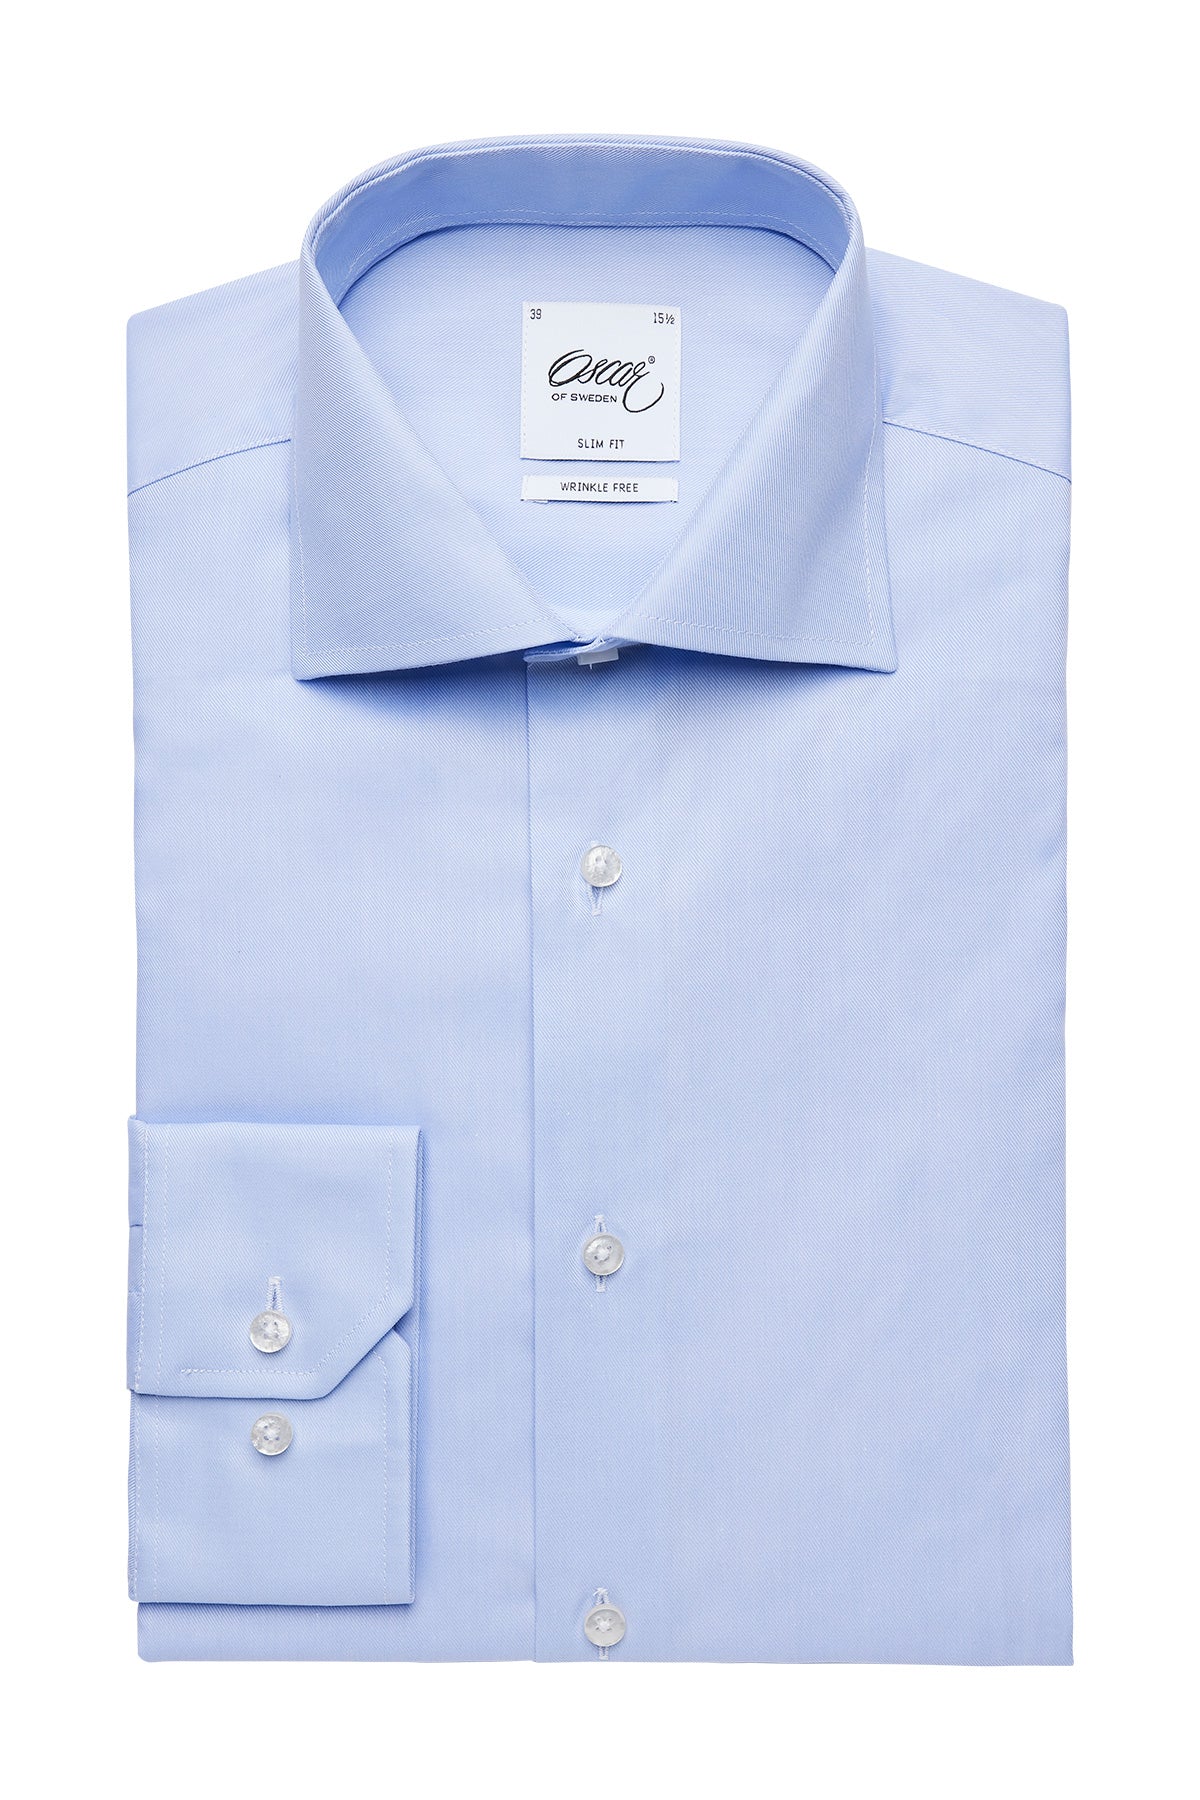 Light blue wrinkle free slim fit shirt